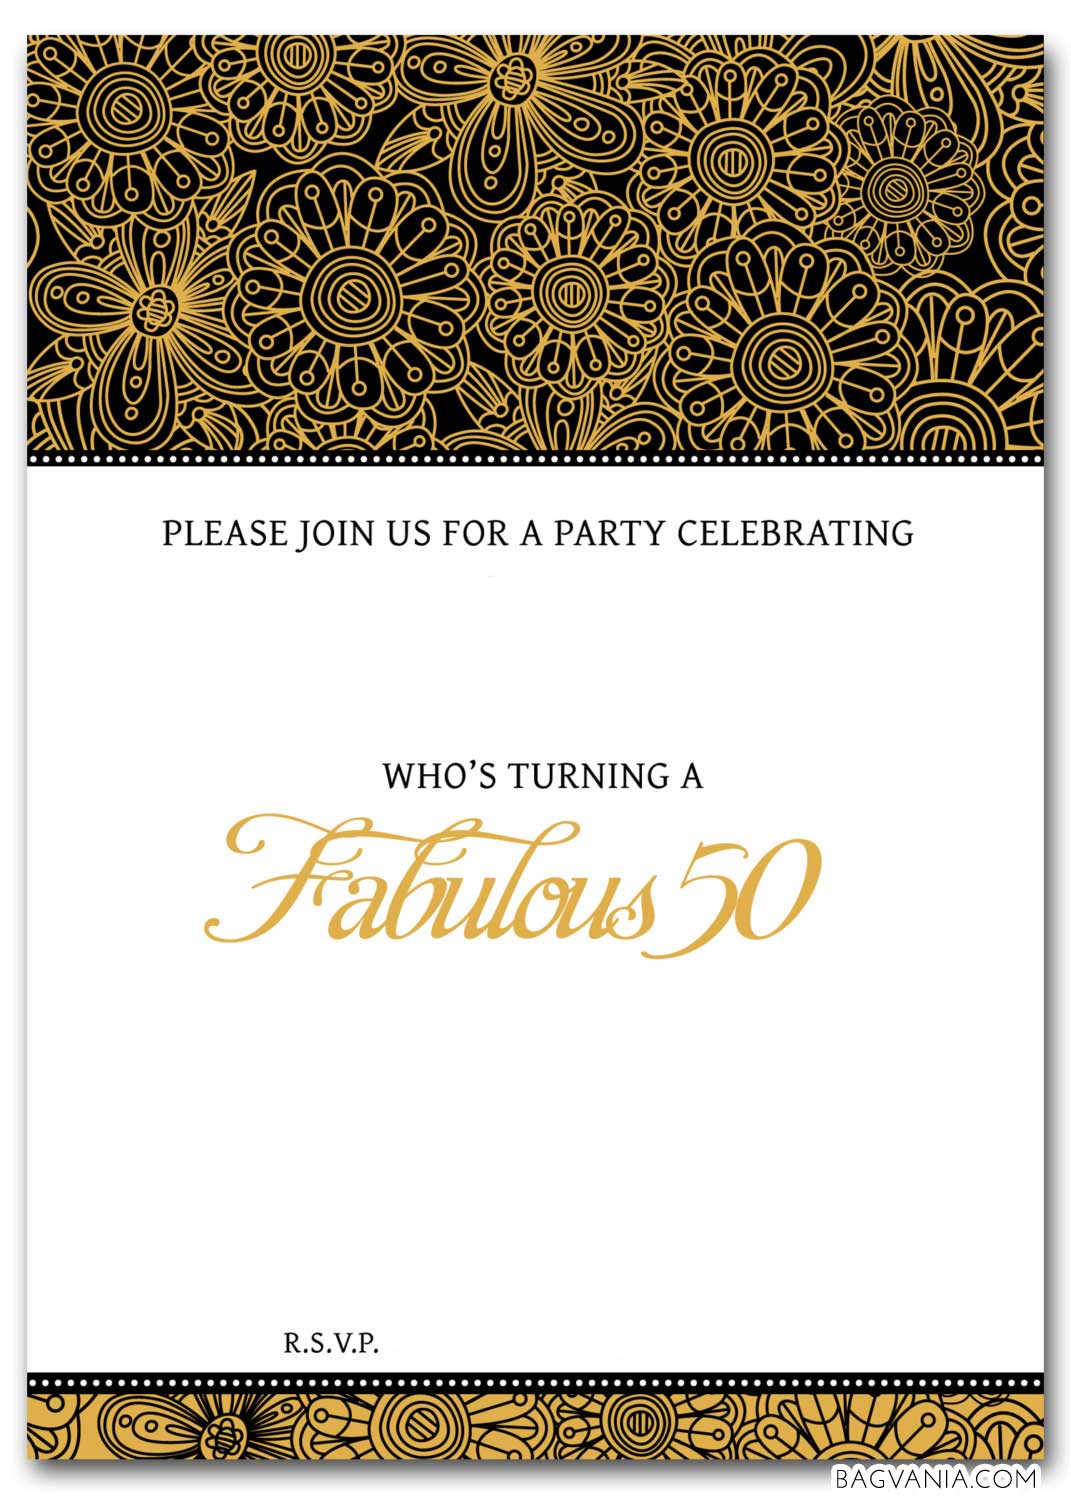 FREE 50th Birthday Party Invitations Wording Bagvania FREE Printable 